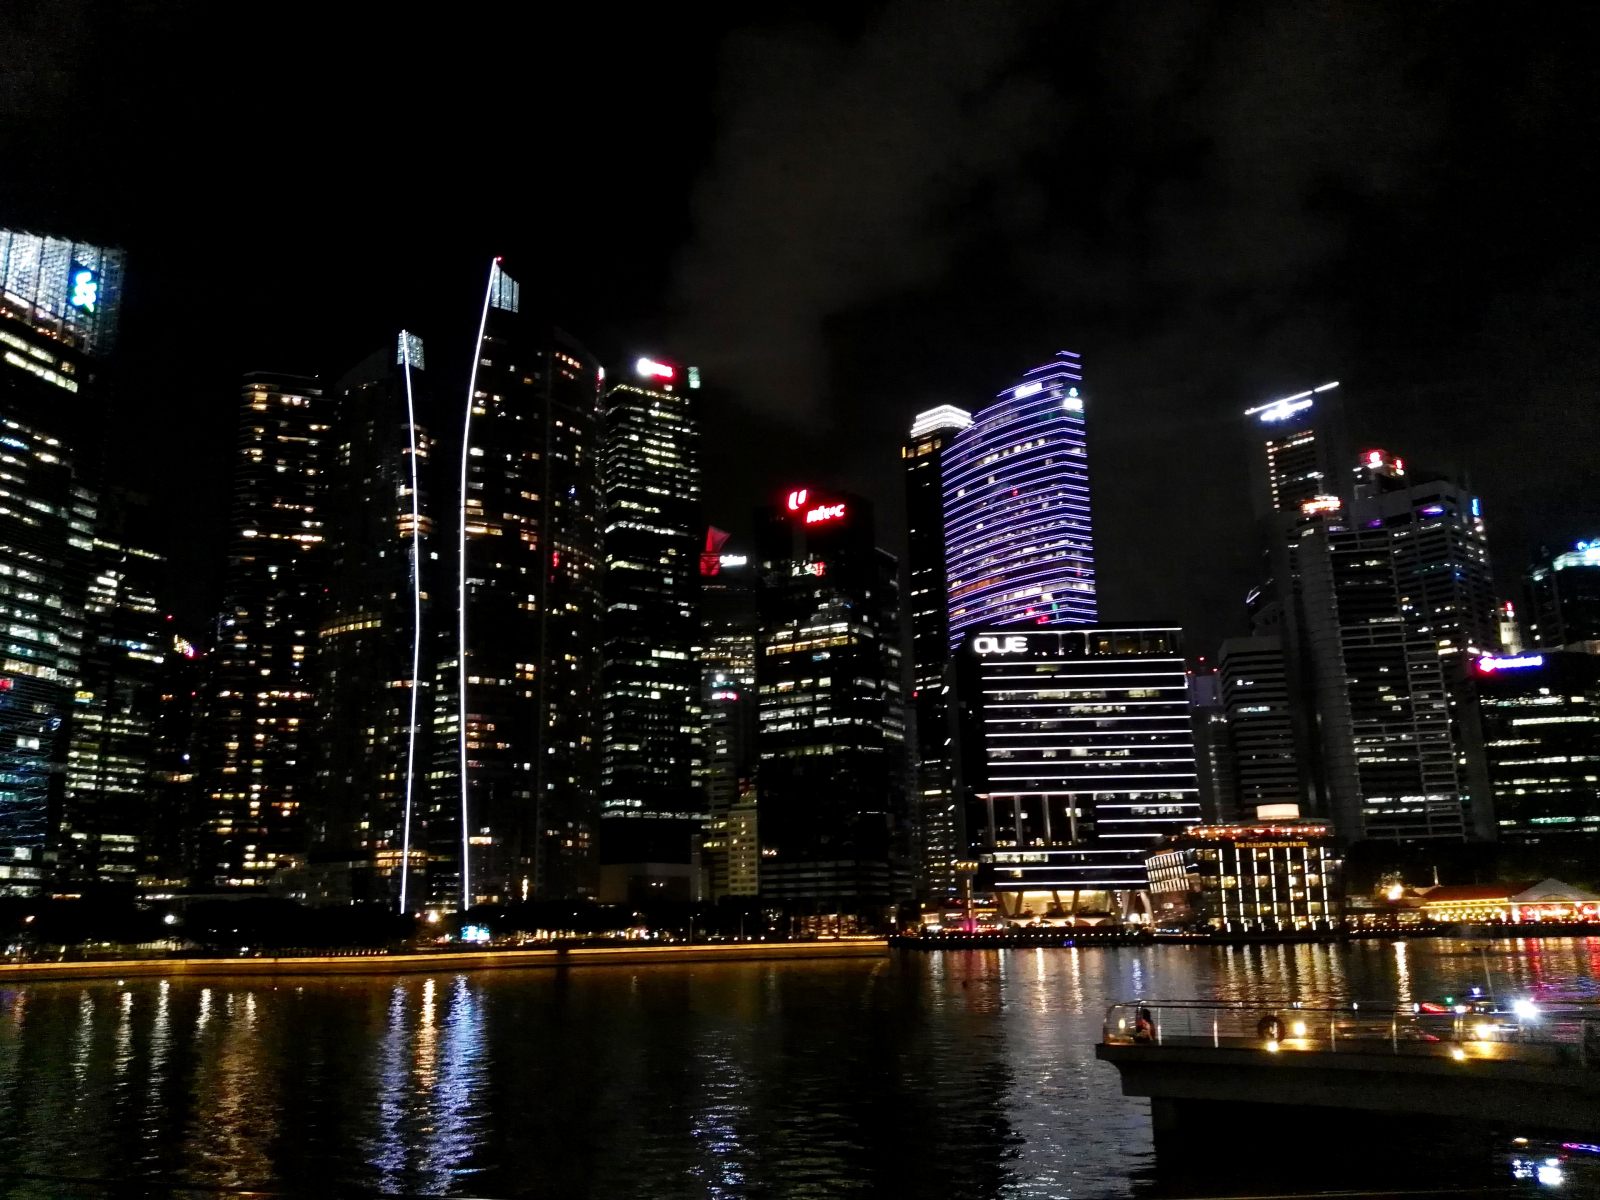 Panorama mrakodrapů v moderní čtvrti, Singapur